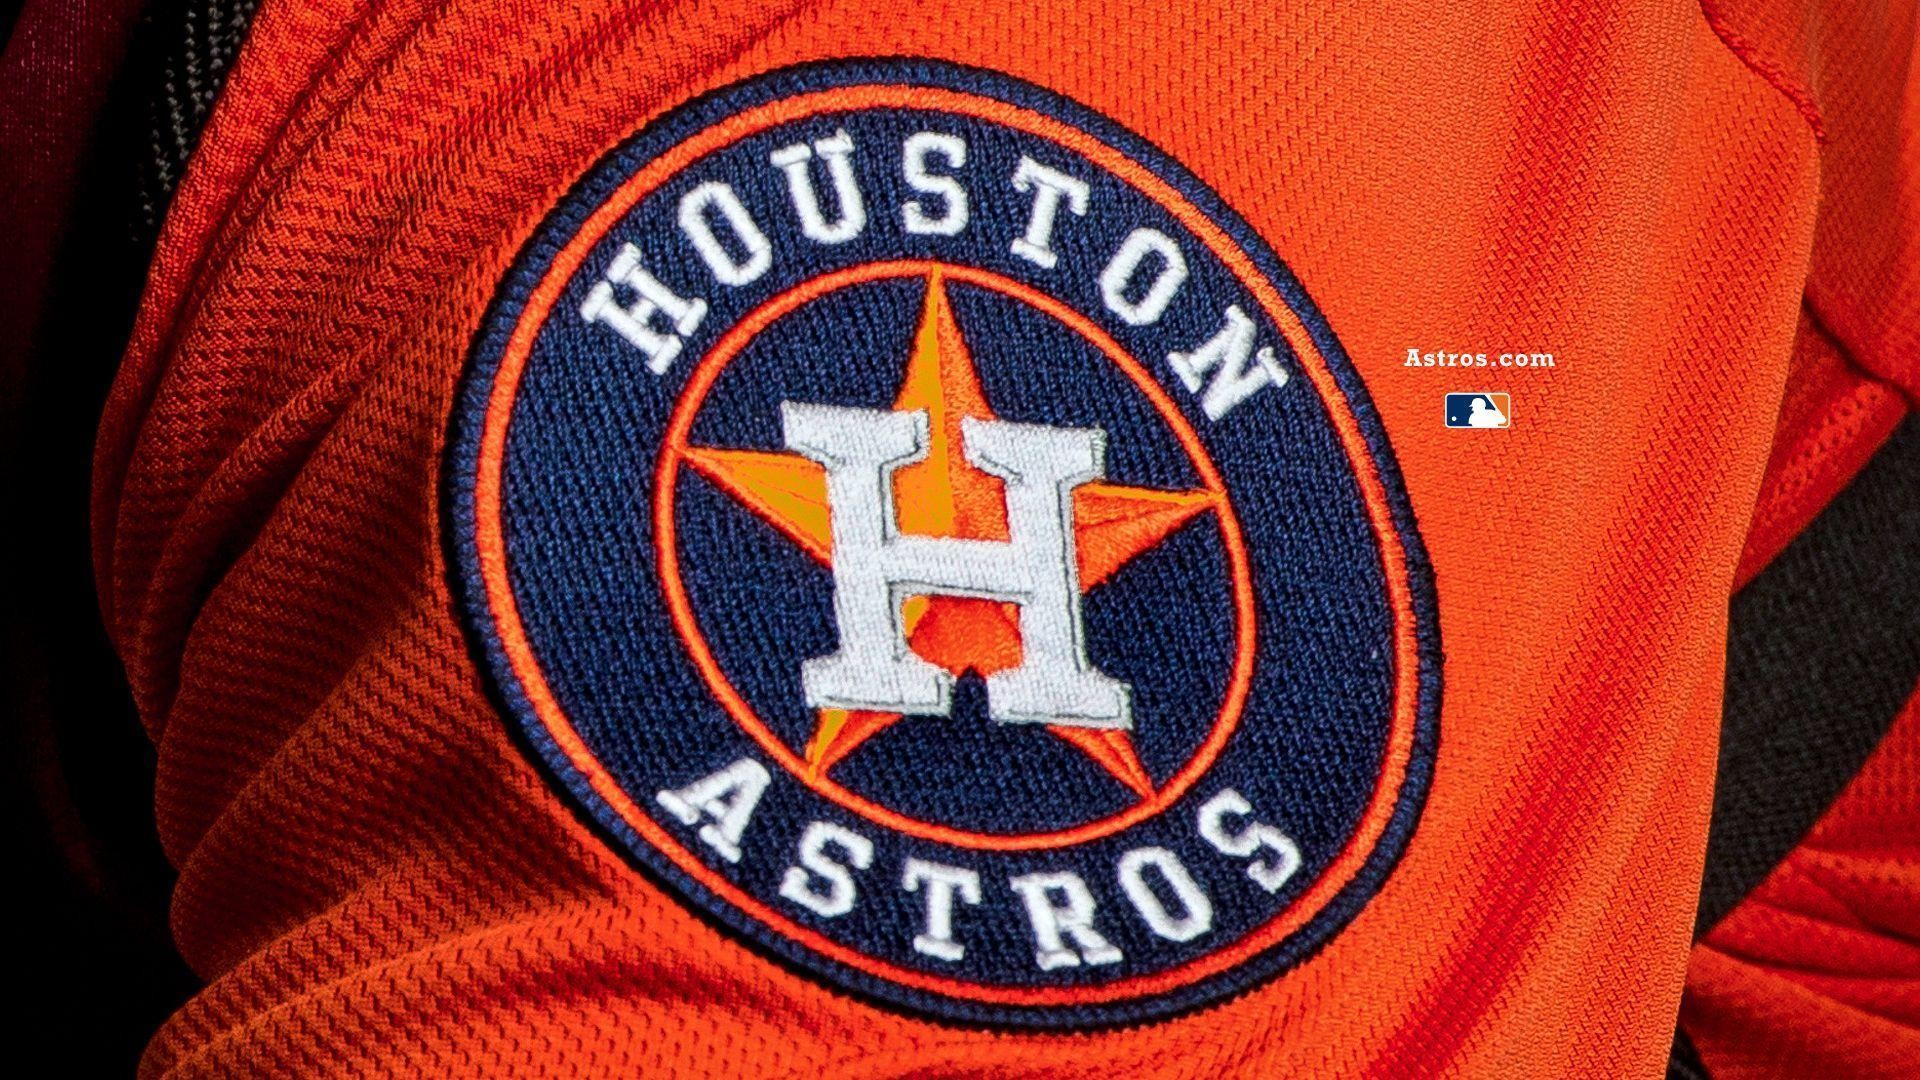 1920x1080 Houston Astros Desktop Wallpaper - WallpaperSafari